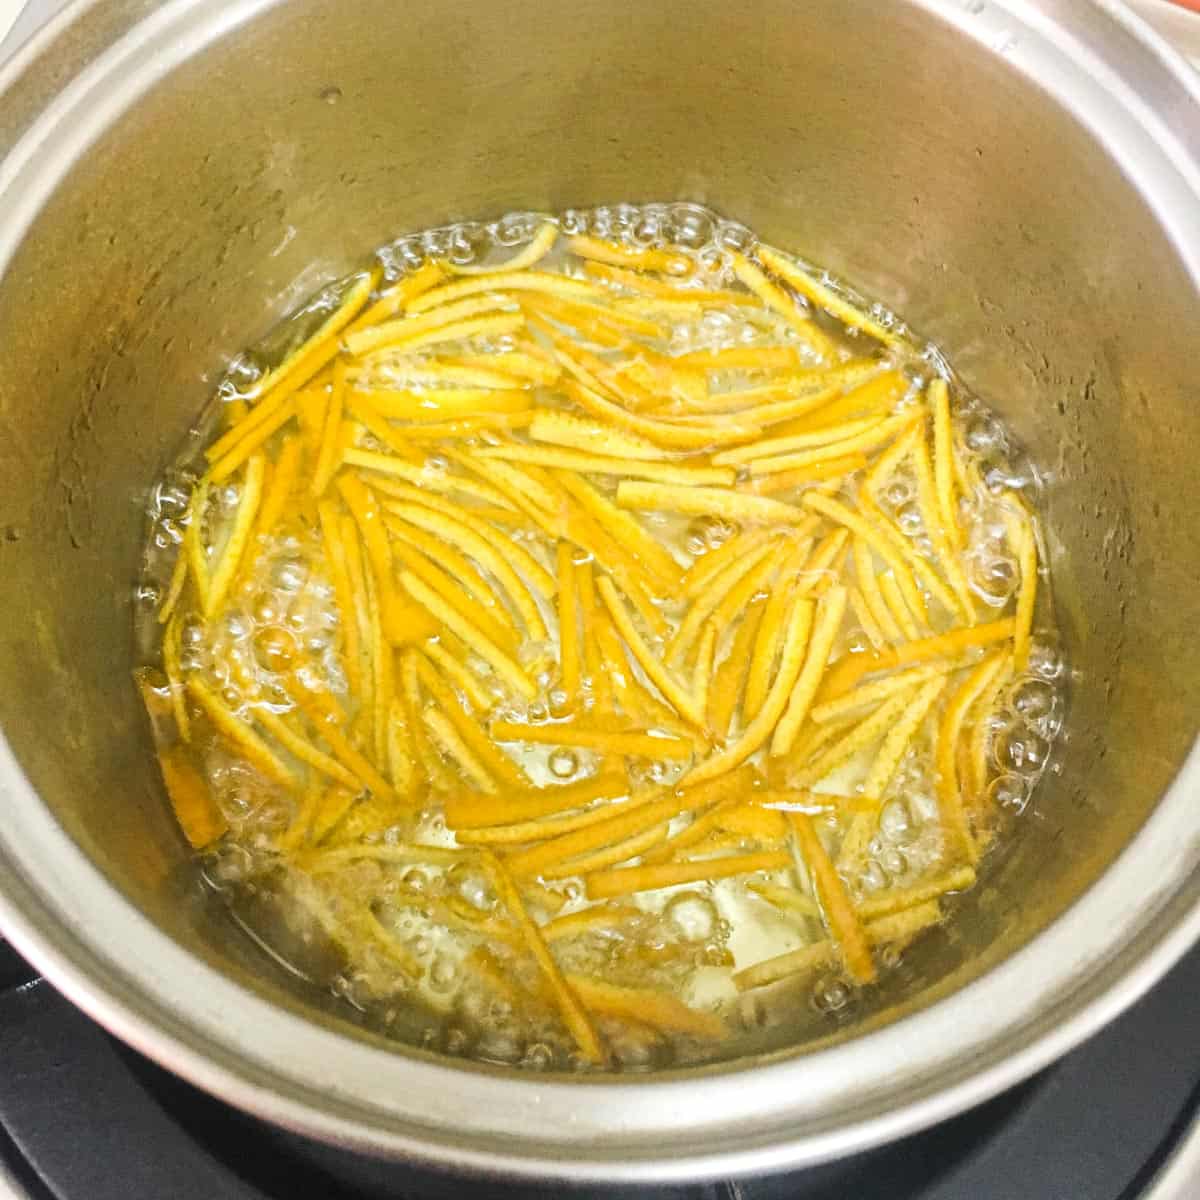 Orange peel strips simmering in a small pot